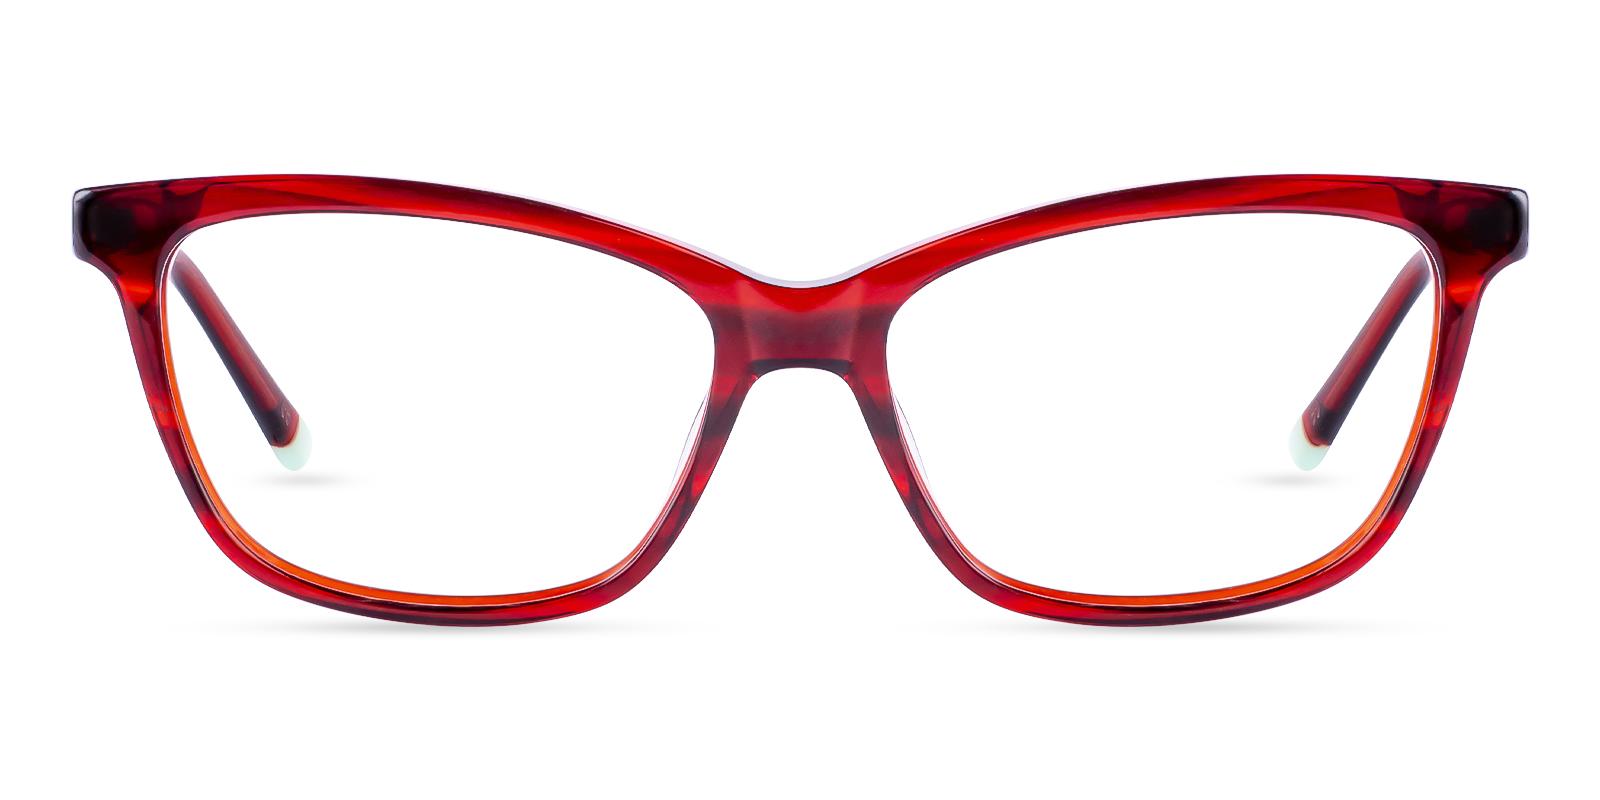 Zion Red Acetate Eyeglasses , SpringHinges , UniversalBridgeFit Frames from ABBE Glasses